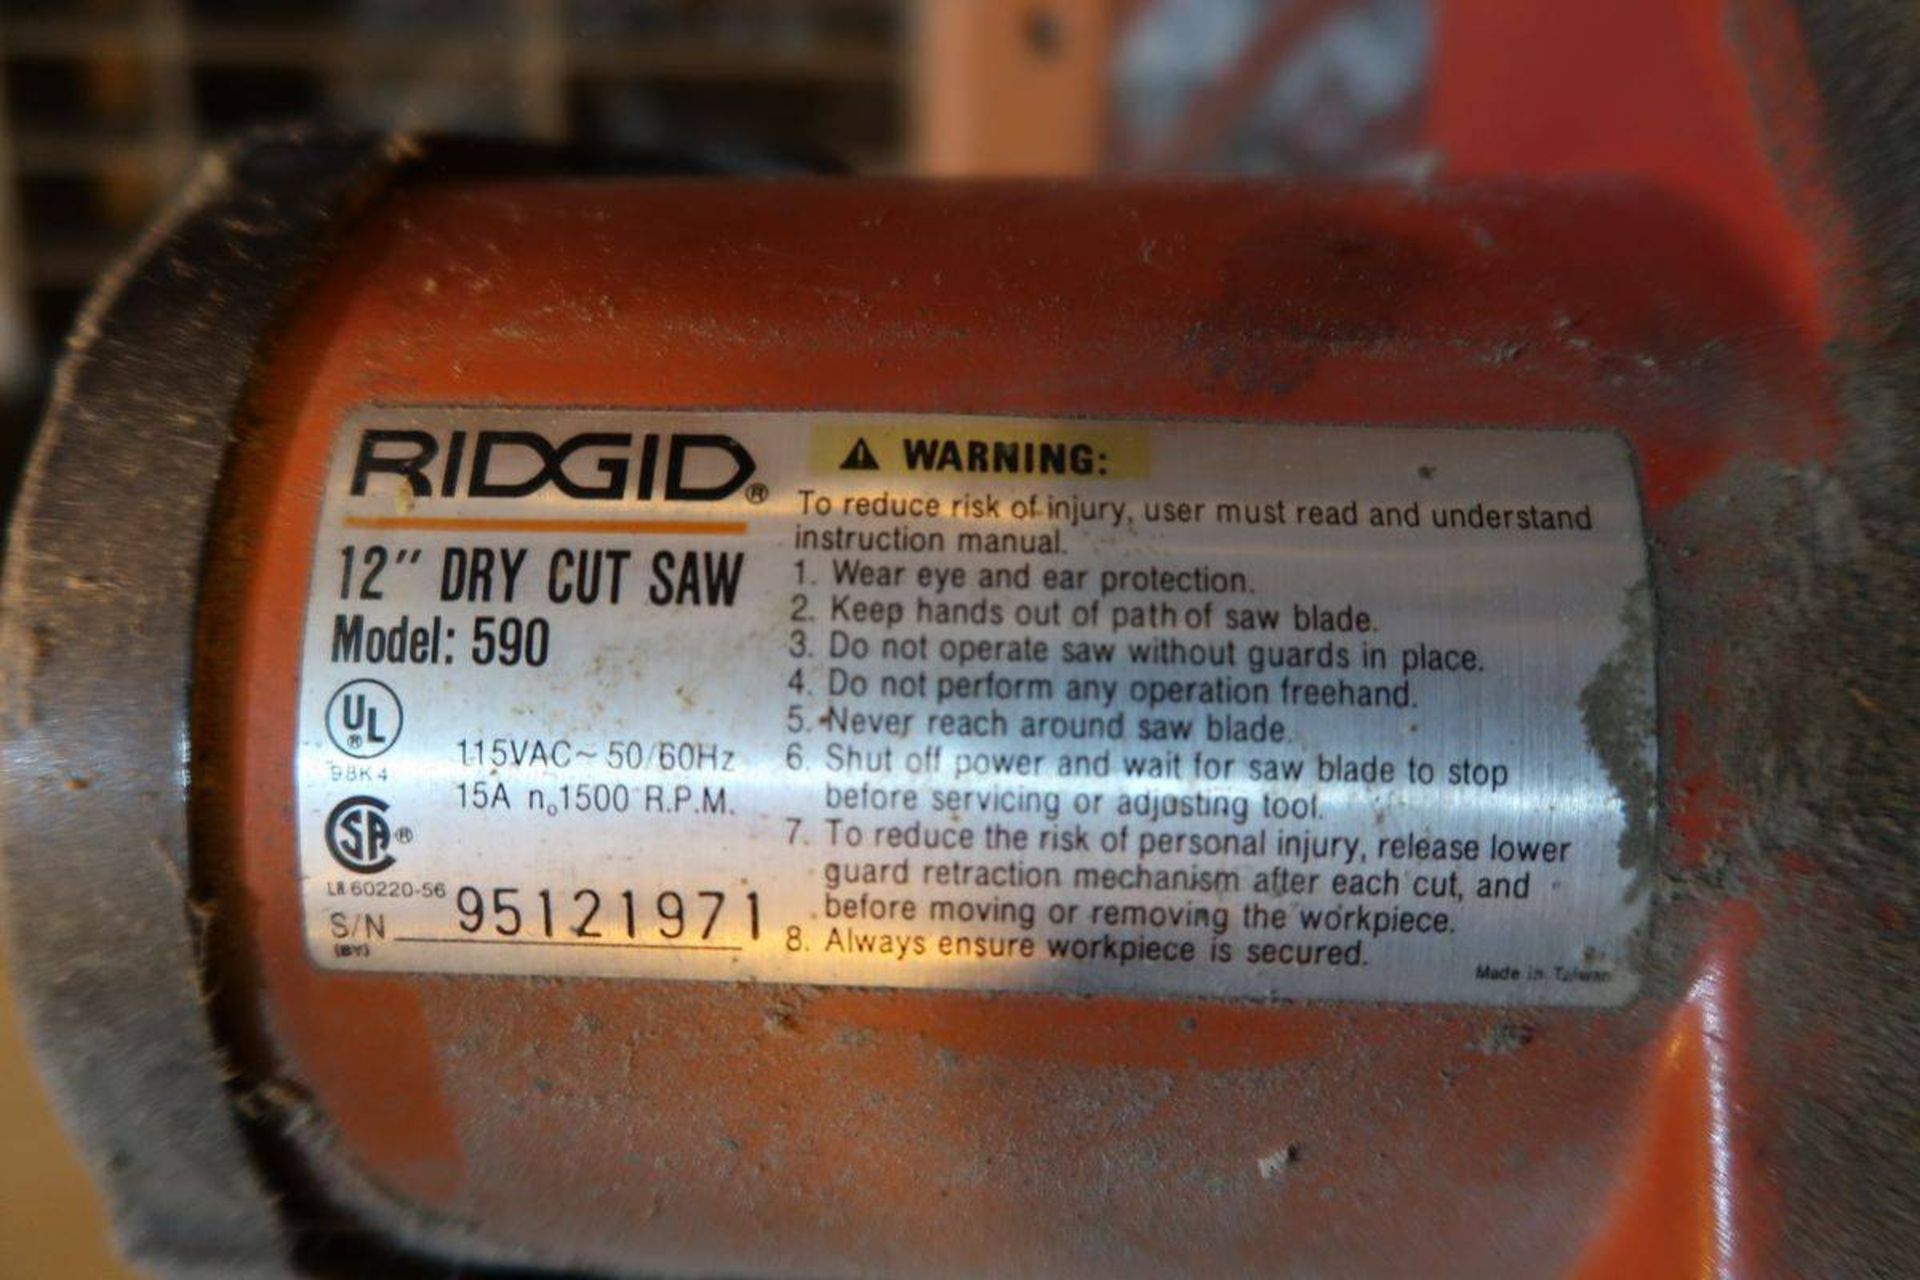 Ridgid 590 12" Dry Cut Saw - Image 4 of 4